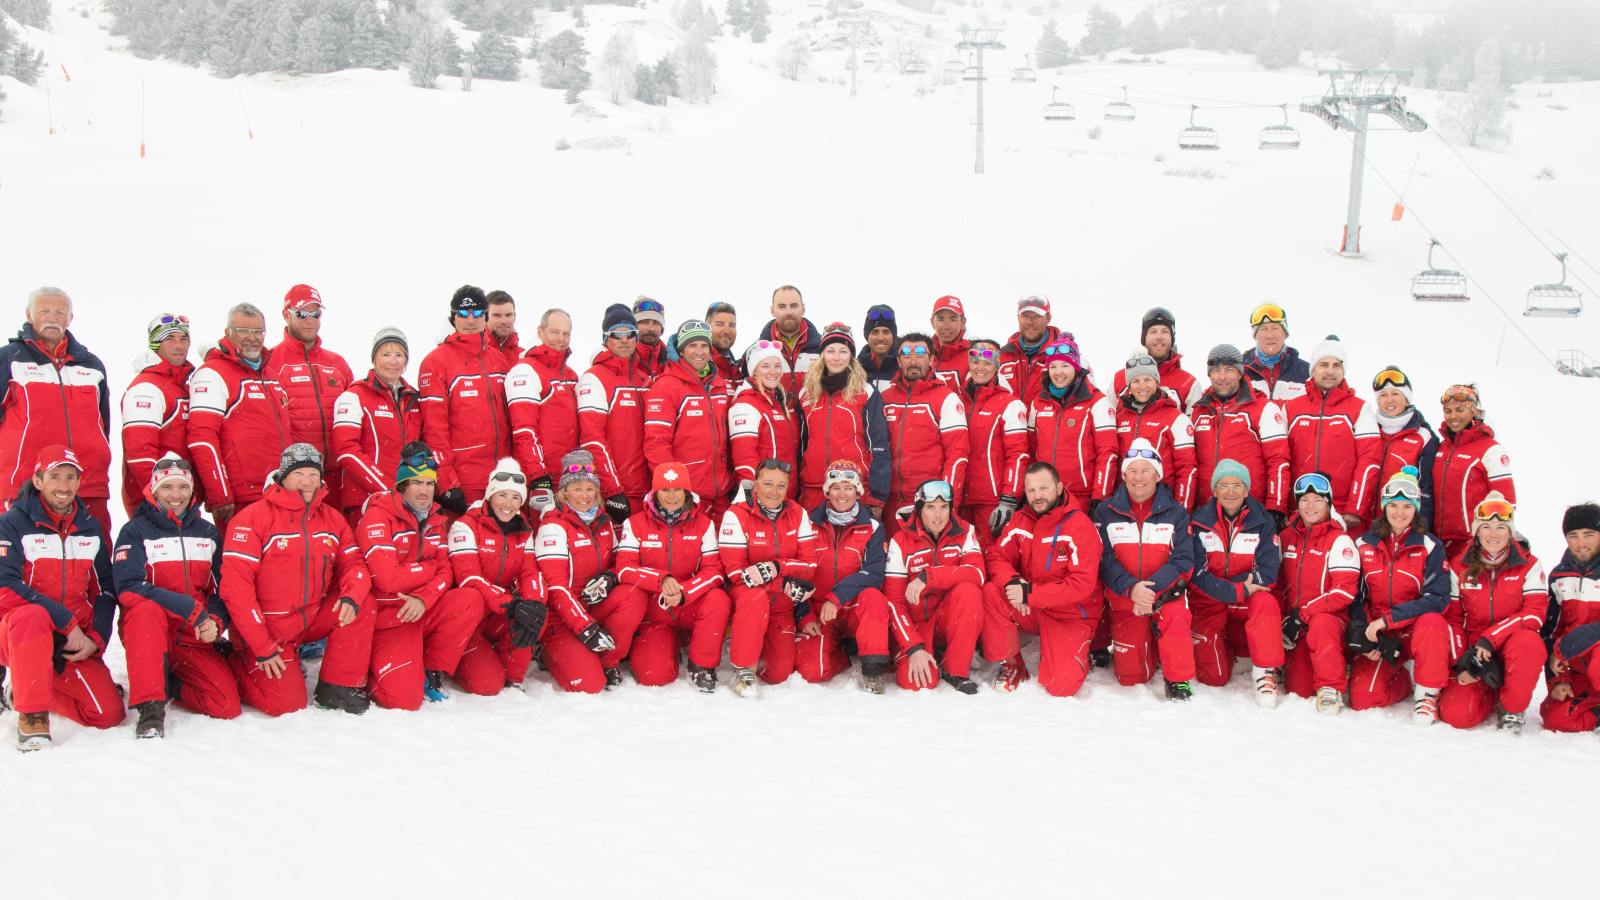 French Ski School of Aussois